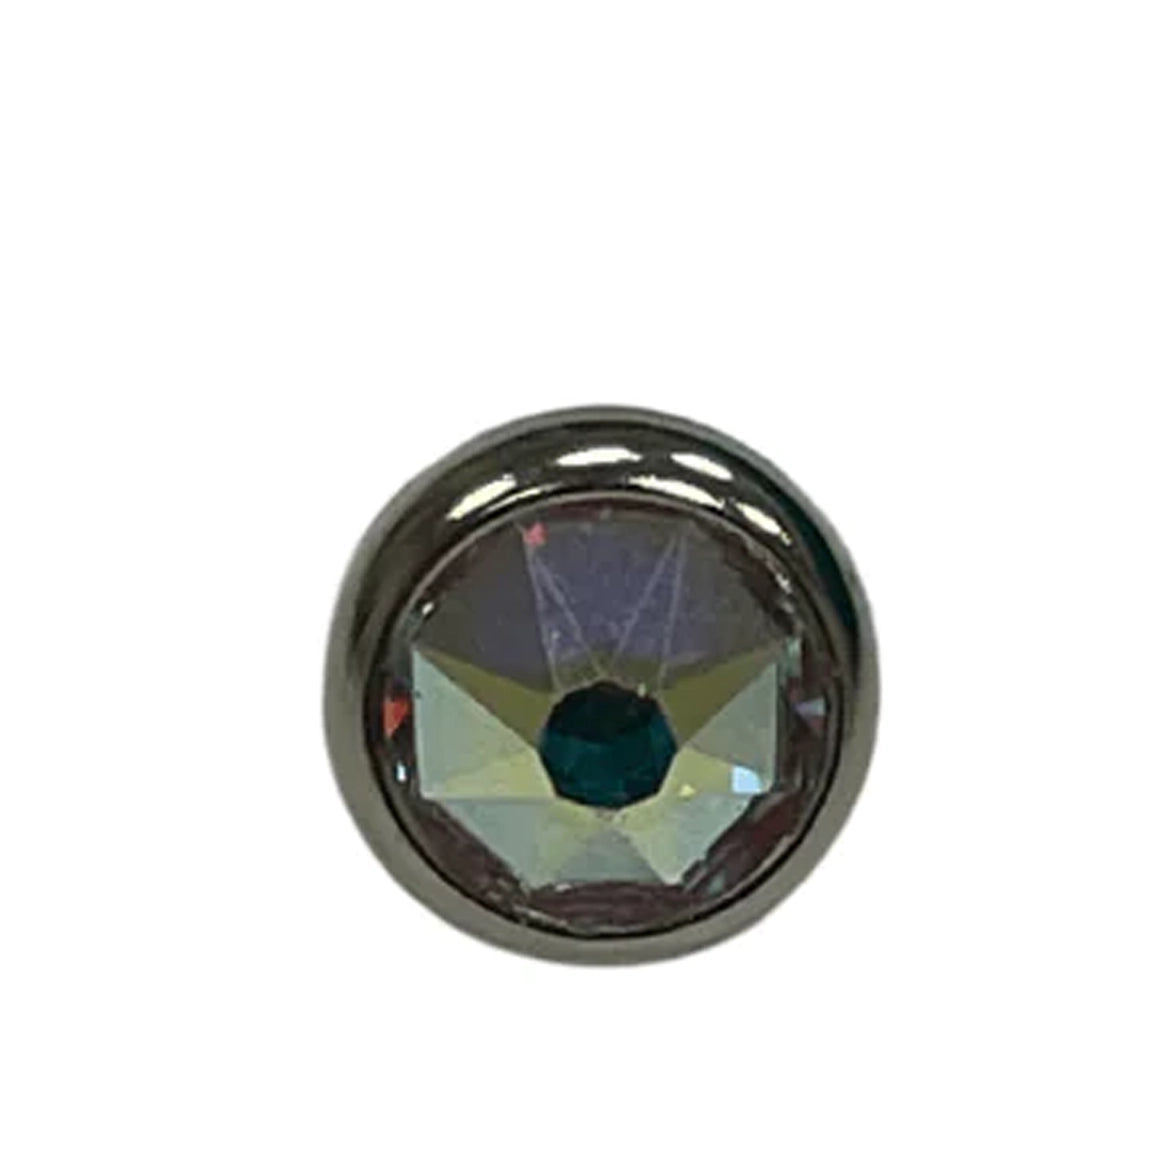 5/16" Aurora Borealis, Swarovski Crystal Ornament, Zinc Alloy, #A-405-AB